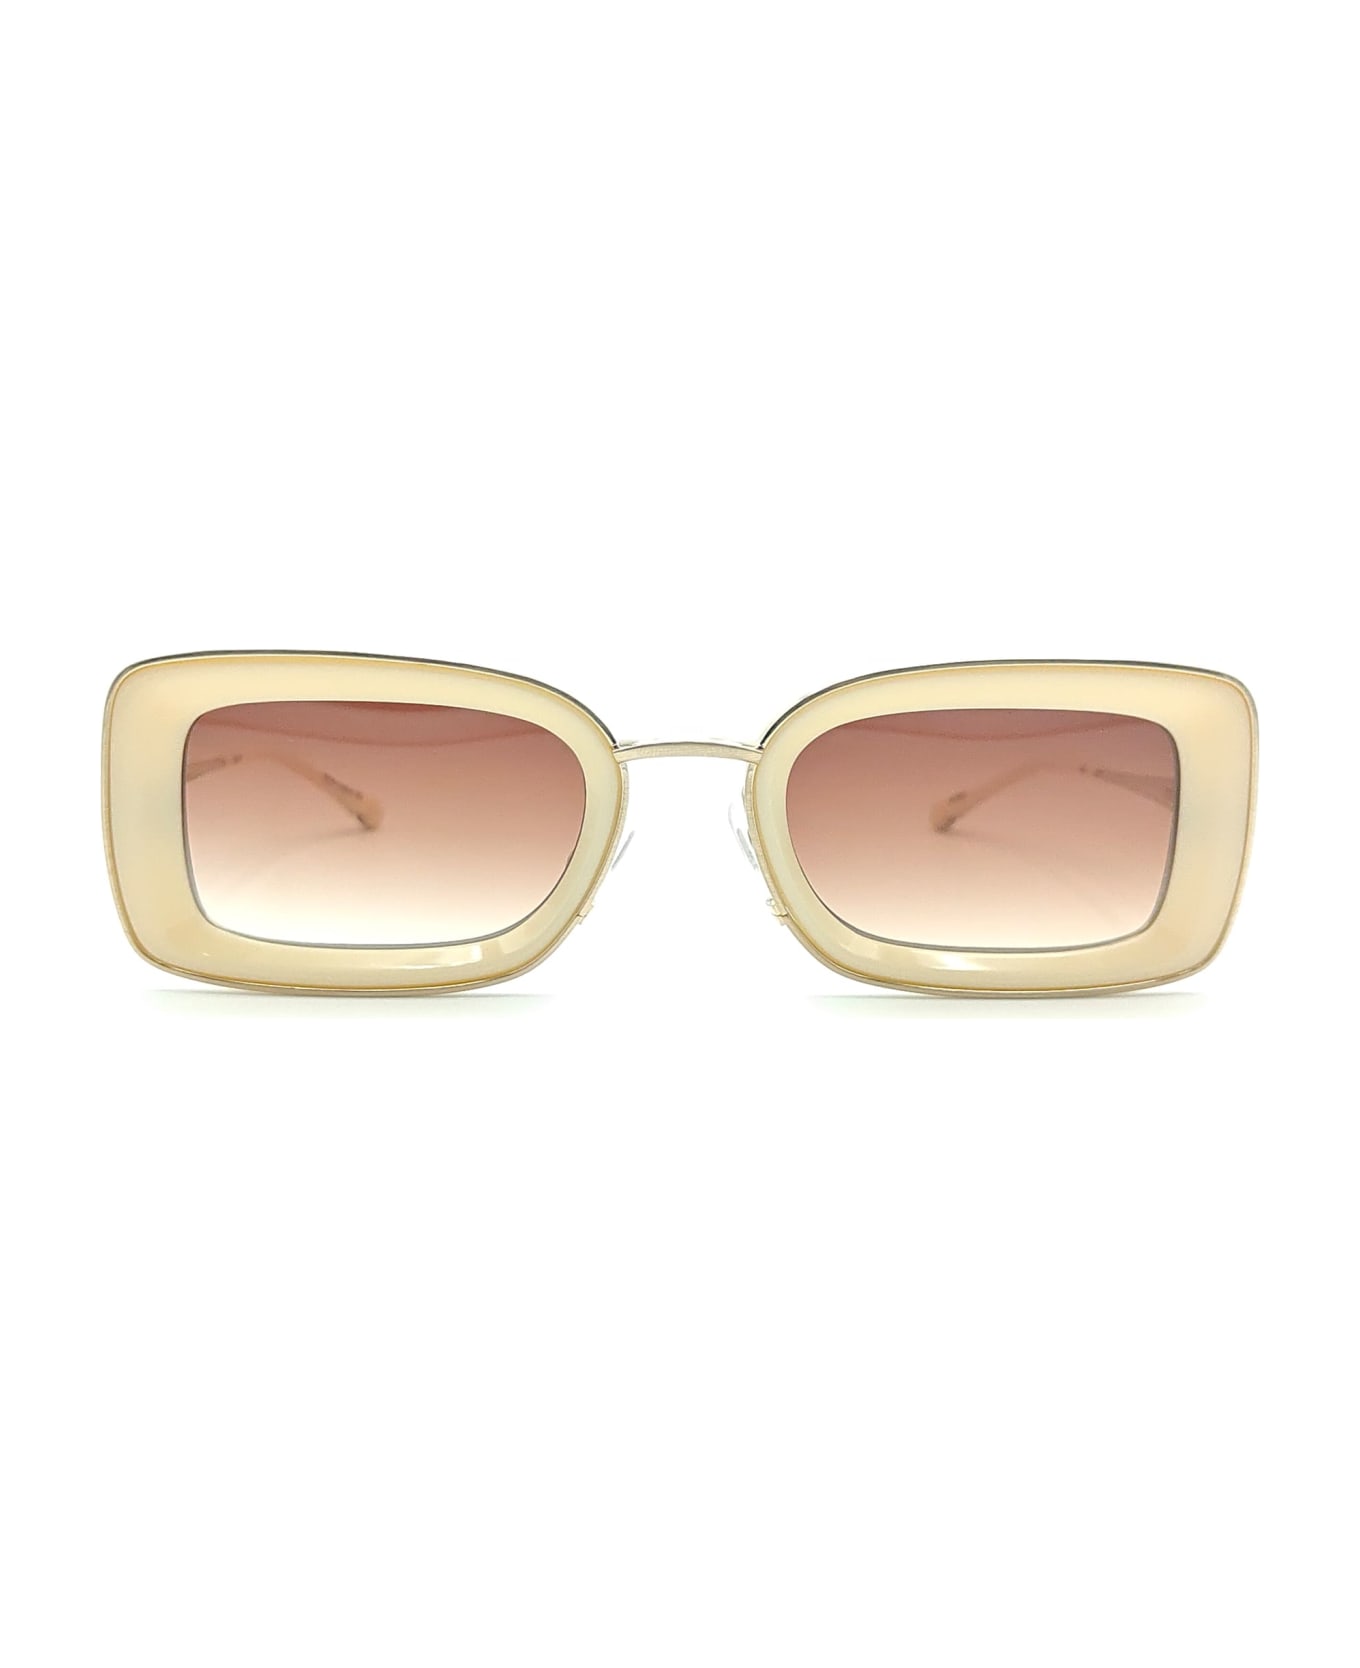 Matsuda M3124 - Brushed Gold / Milk White Sunglasses - Gold/White サングラス